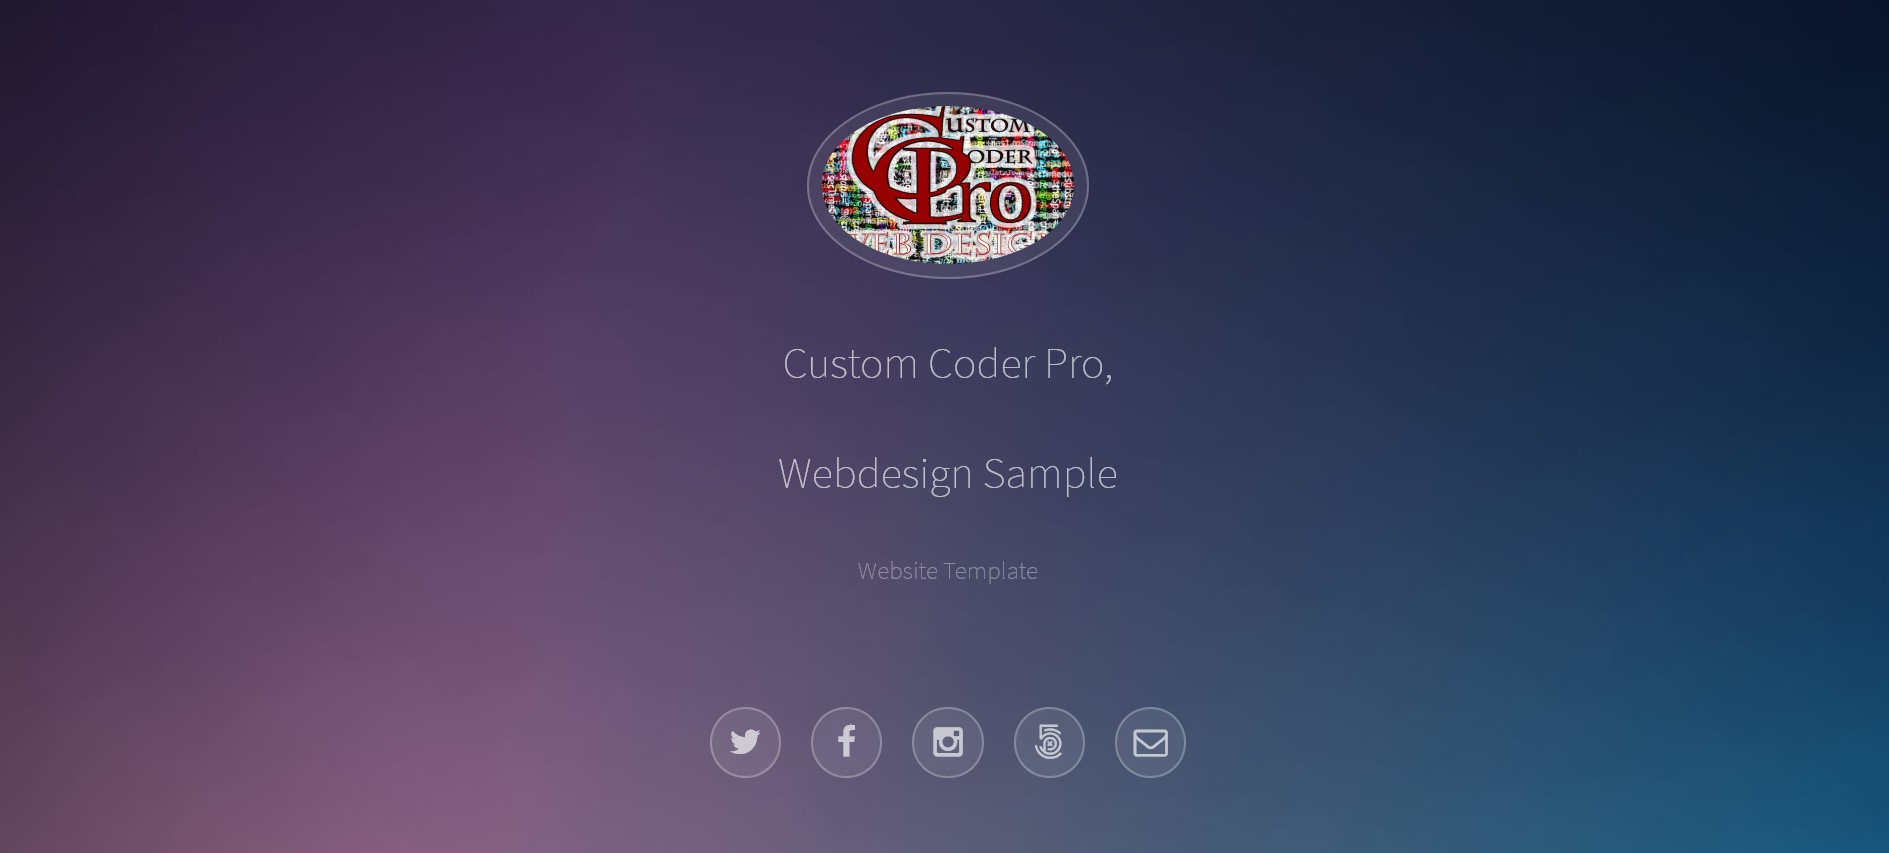 Custom Coder Pro Website Sample